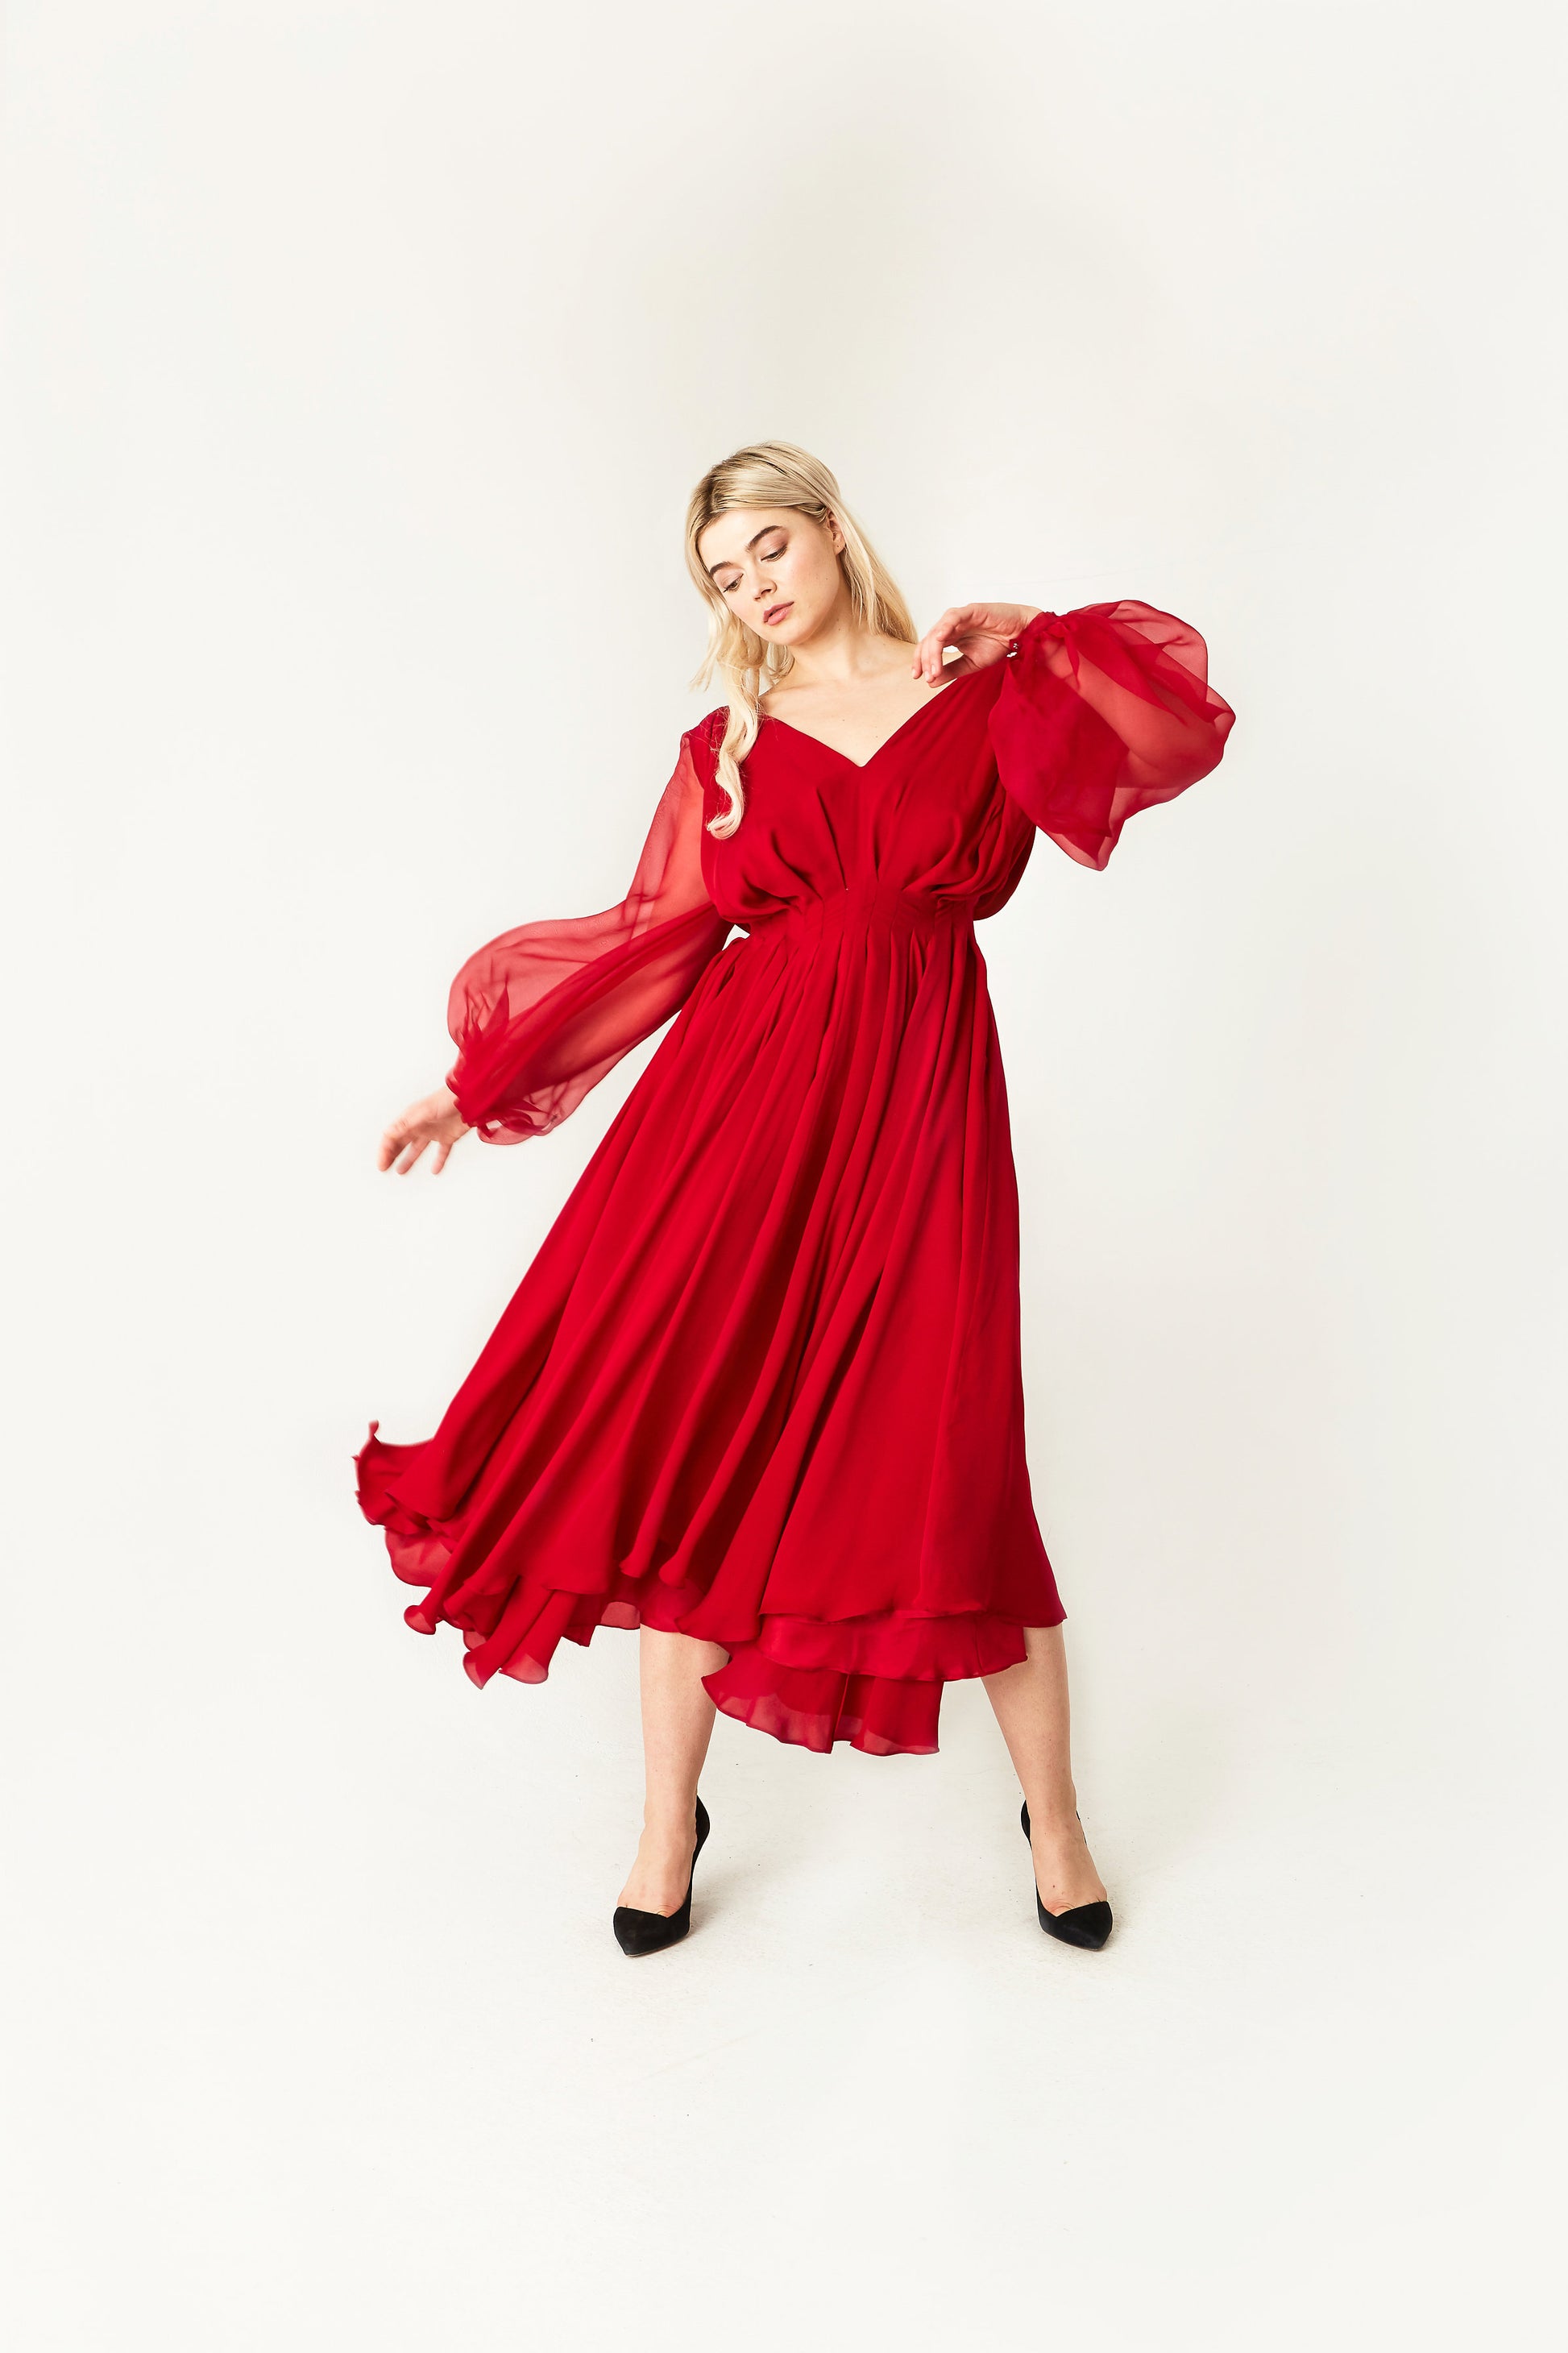 Red Romantic Dresses & Silk Georgette Dress | Jasmine Chong